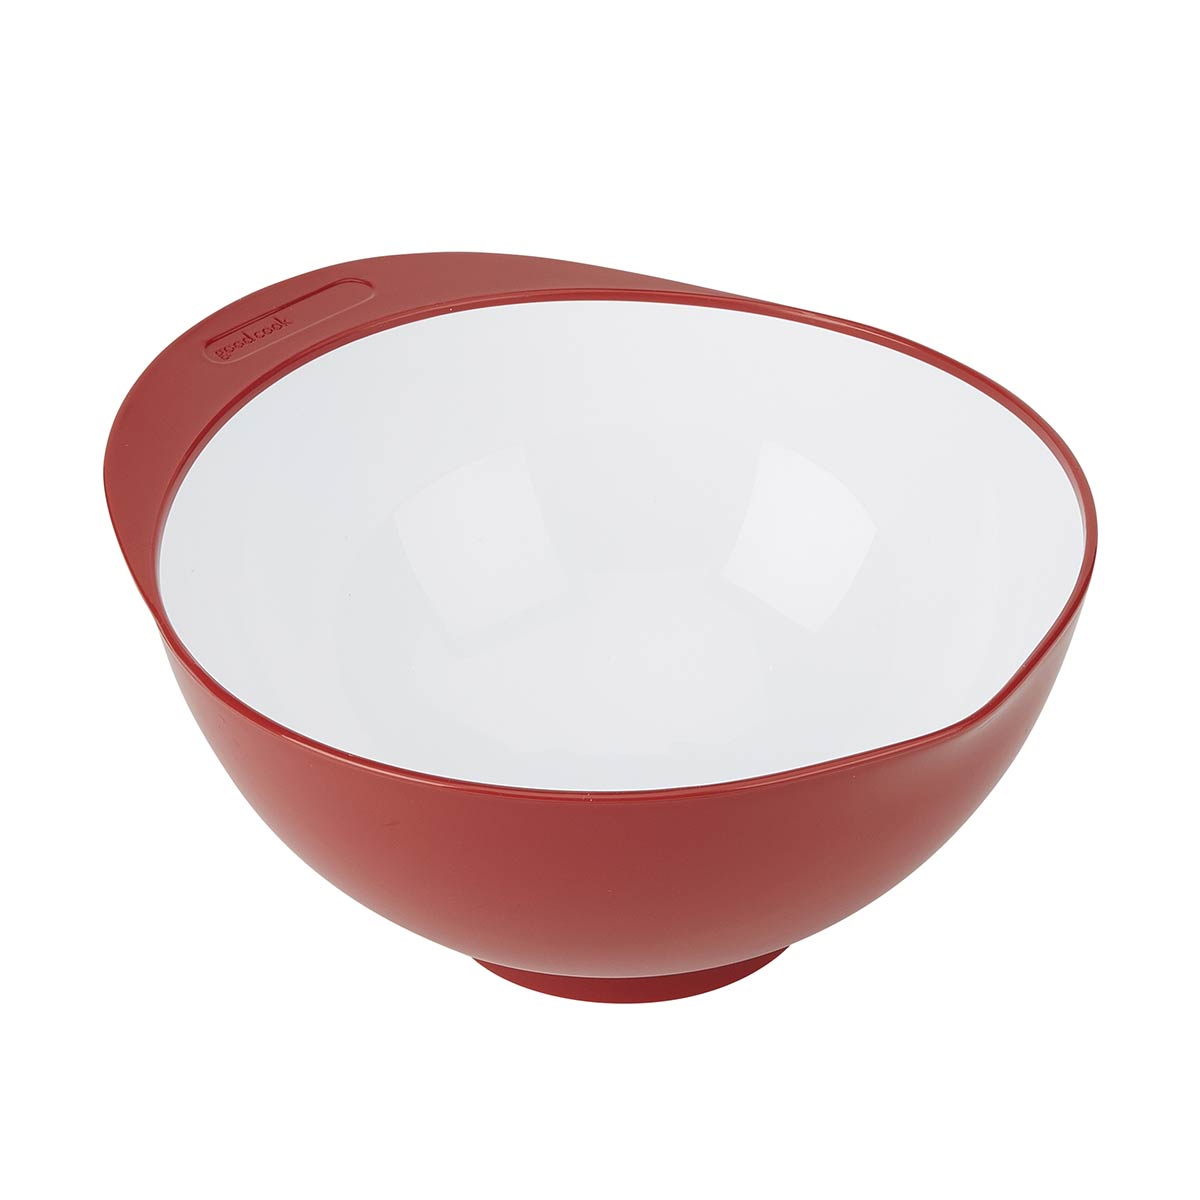 https://www.goodcook.com/media/catalog/product/1/1/11648-goodcook-3-quart-mixing-bowl-001.jpg?auto=webp&format=pjpg